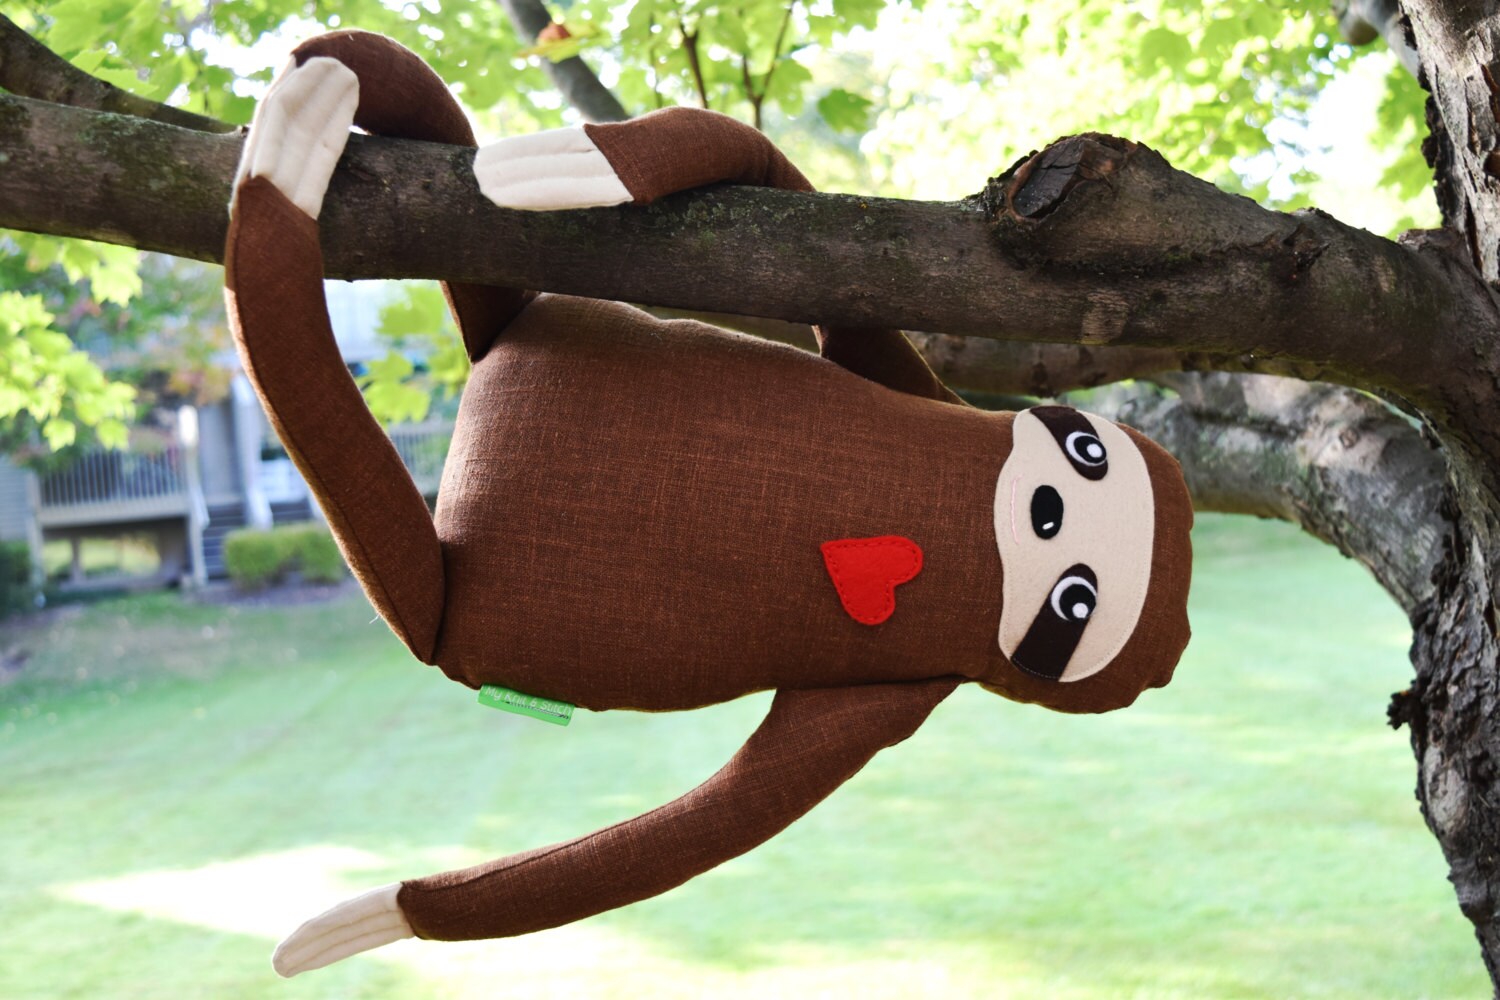 sloth stuffed animal